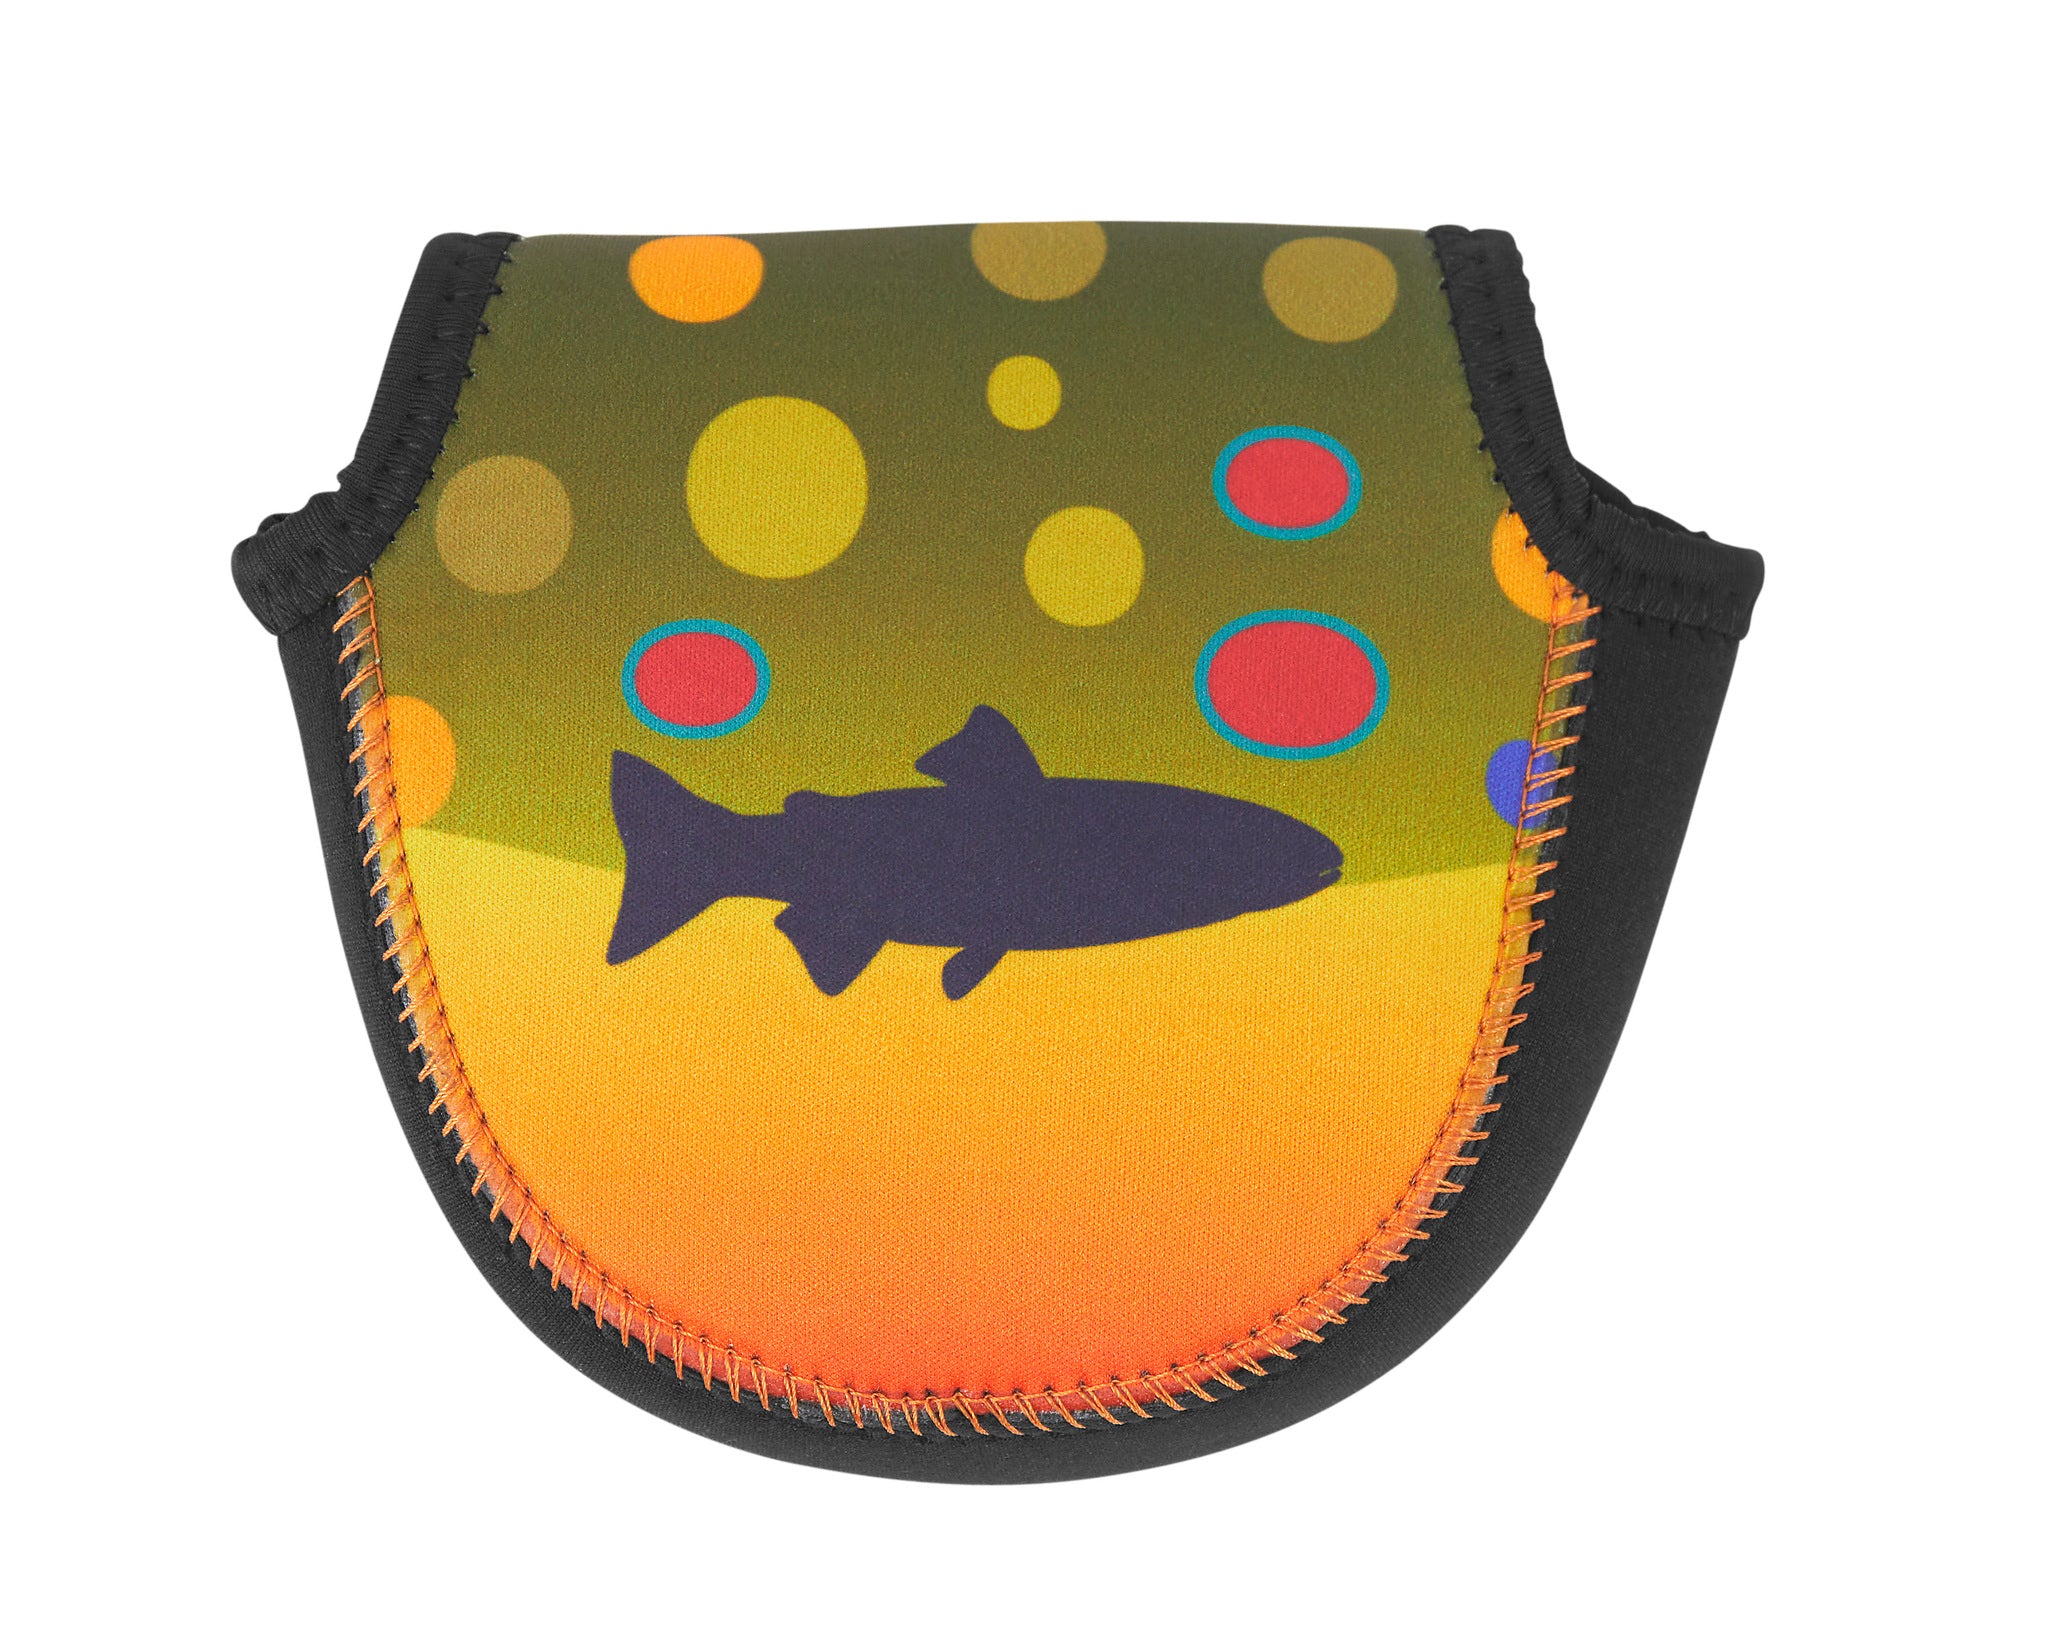 Buy Fly Reel Case  Fly Fishing Reel Bag Online - Cheeky Fishing